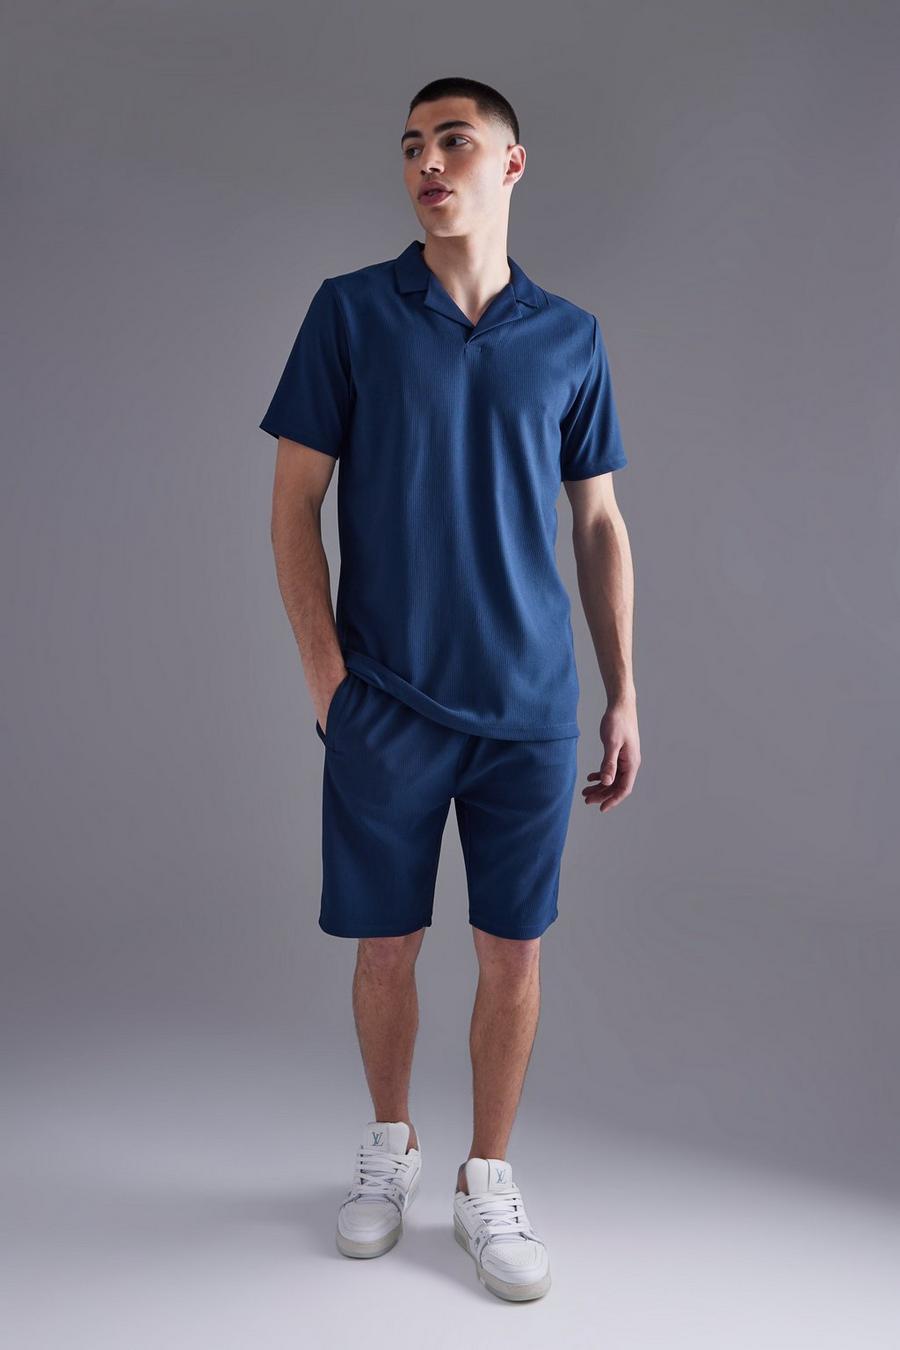 Conjunto de pantalón corto y polo ajustado de canalé, Navy azul marino